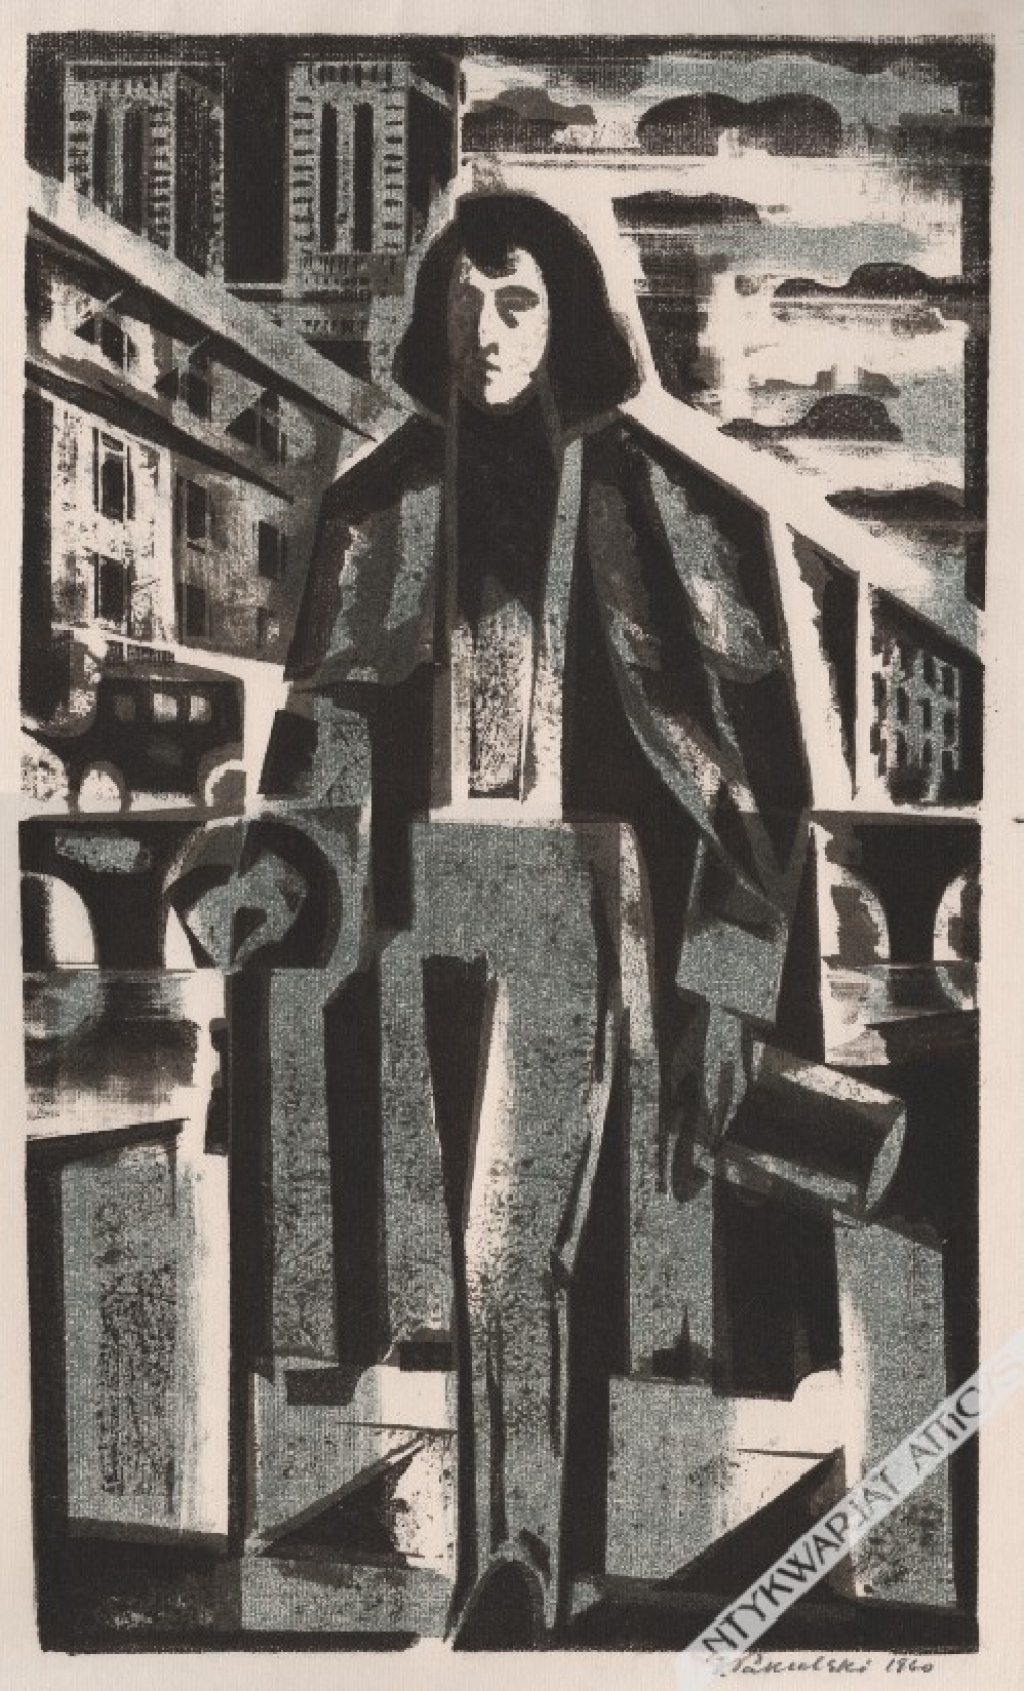 [grafika, 1960] Chopin w Paryżu